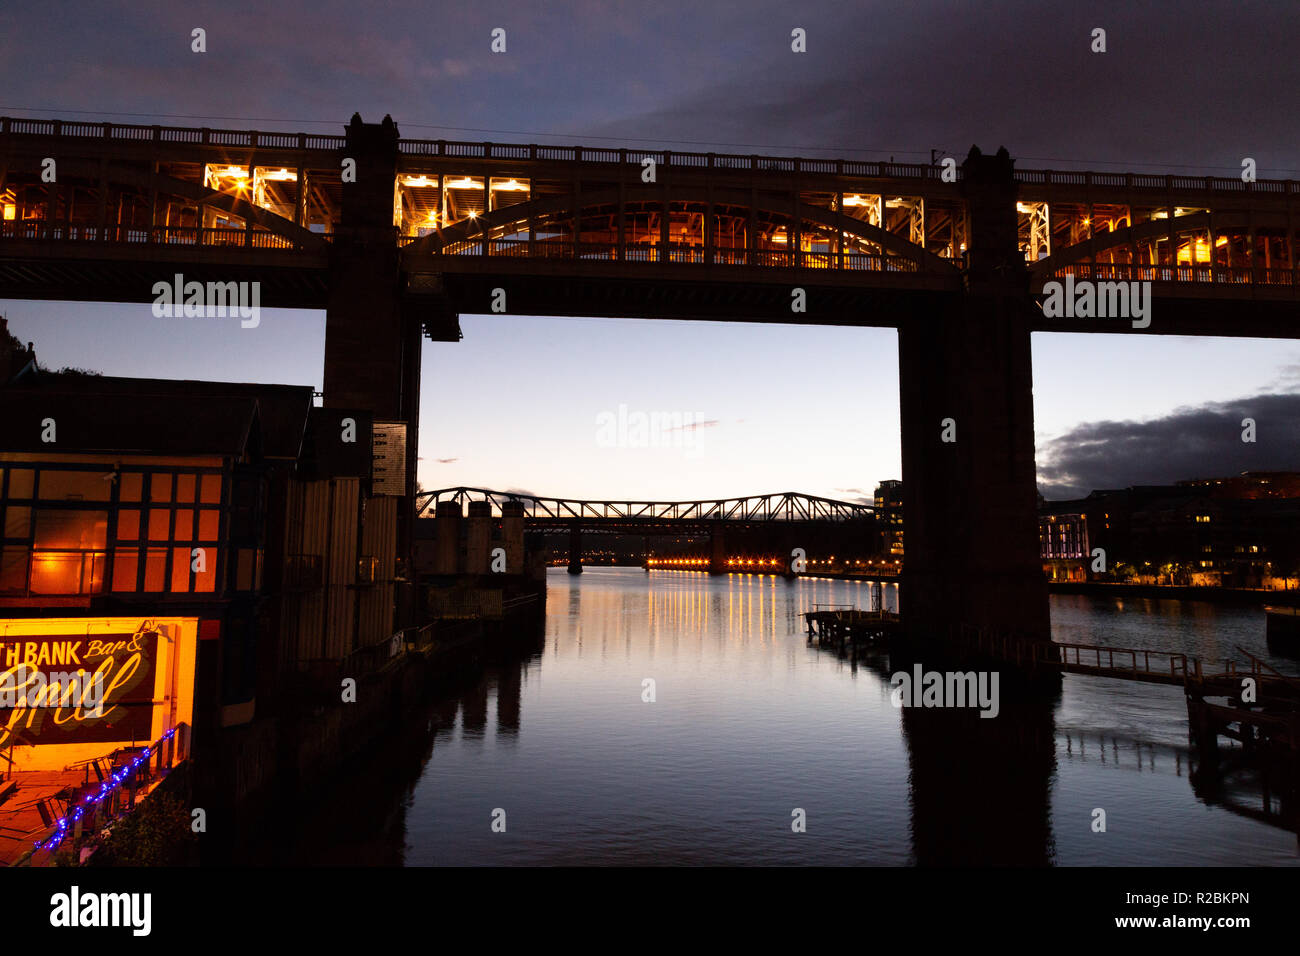 Newcastle upon Tyne/England - October 10th 2014: Dusk on the Tyne, High Level Bridge at night Stock Photo